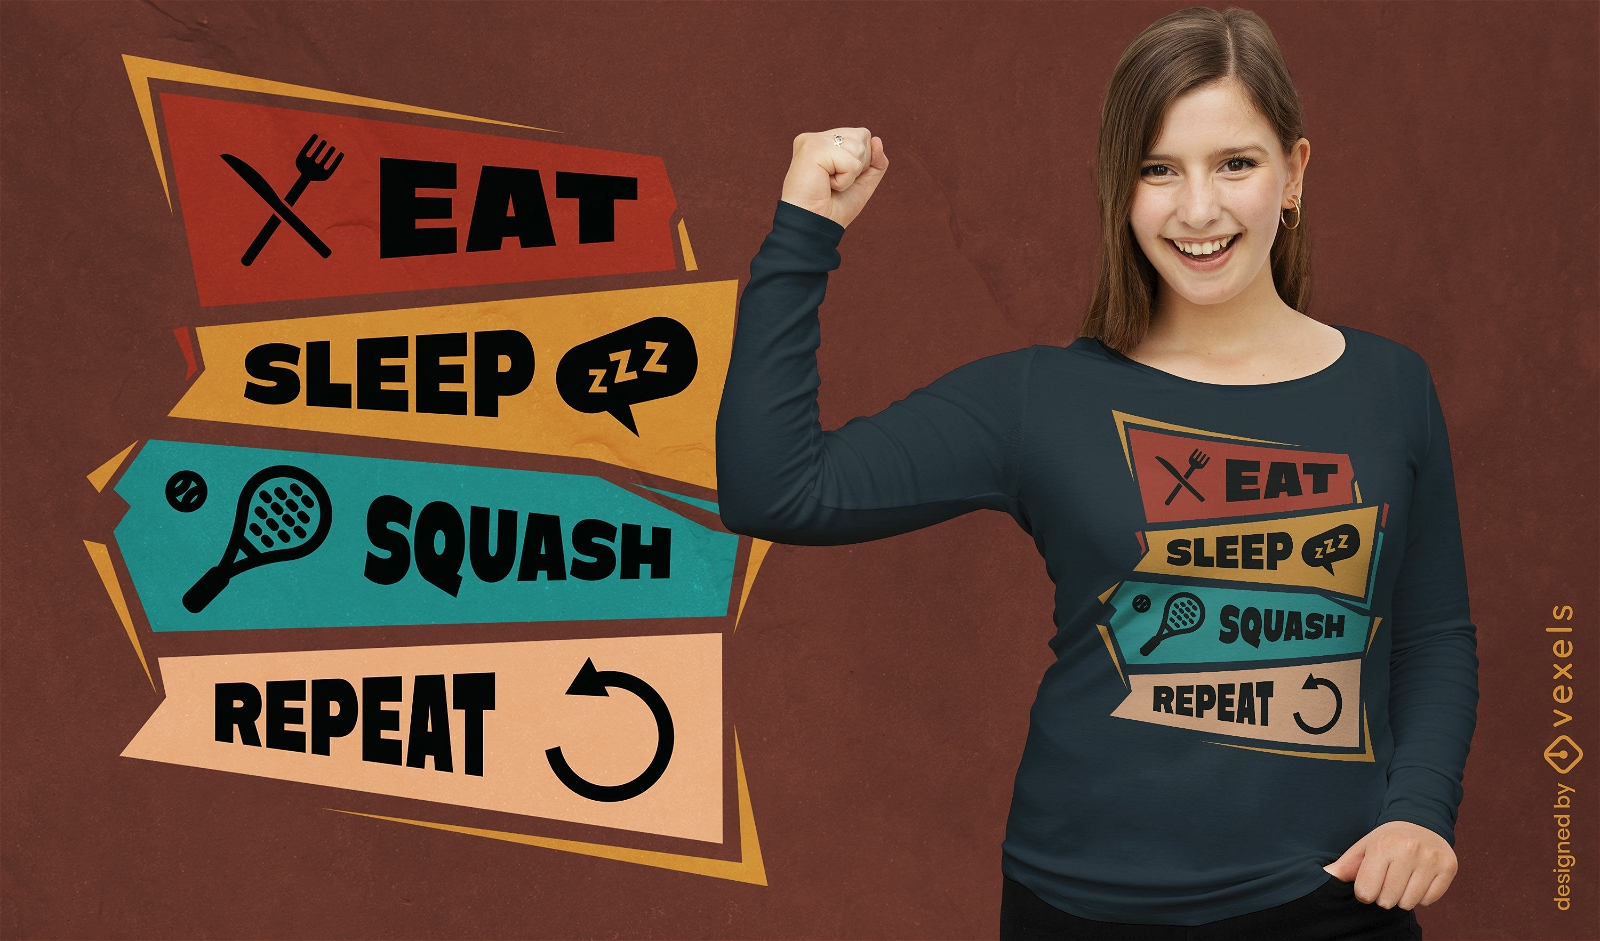 Eat sleep squash repeat t-shirt design